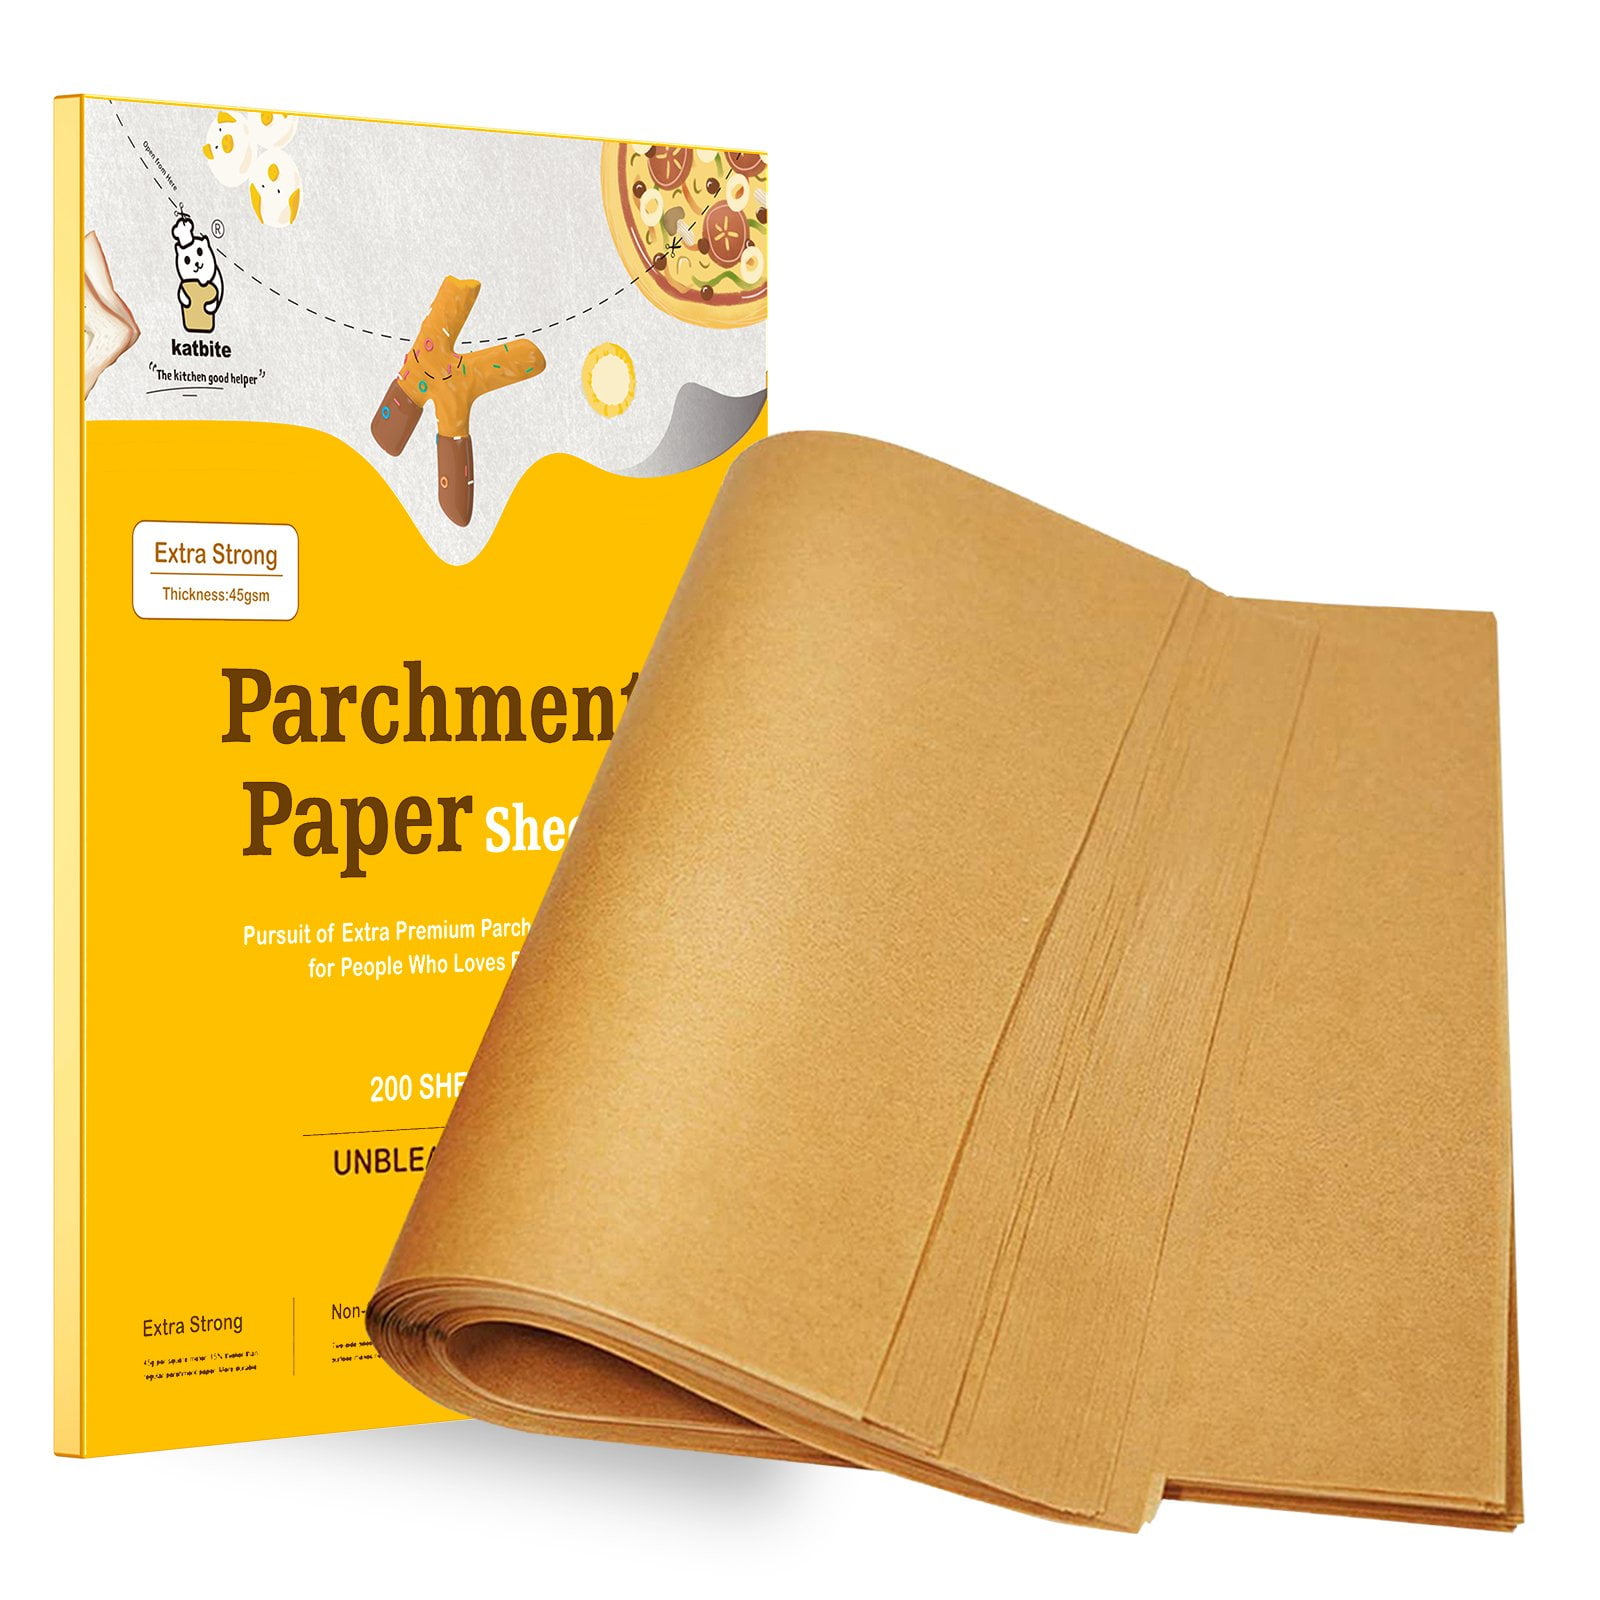 SMARTAKE 200 Pcs Parchment Paper Baking Sheets, 9x13 Inch Non